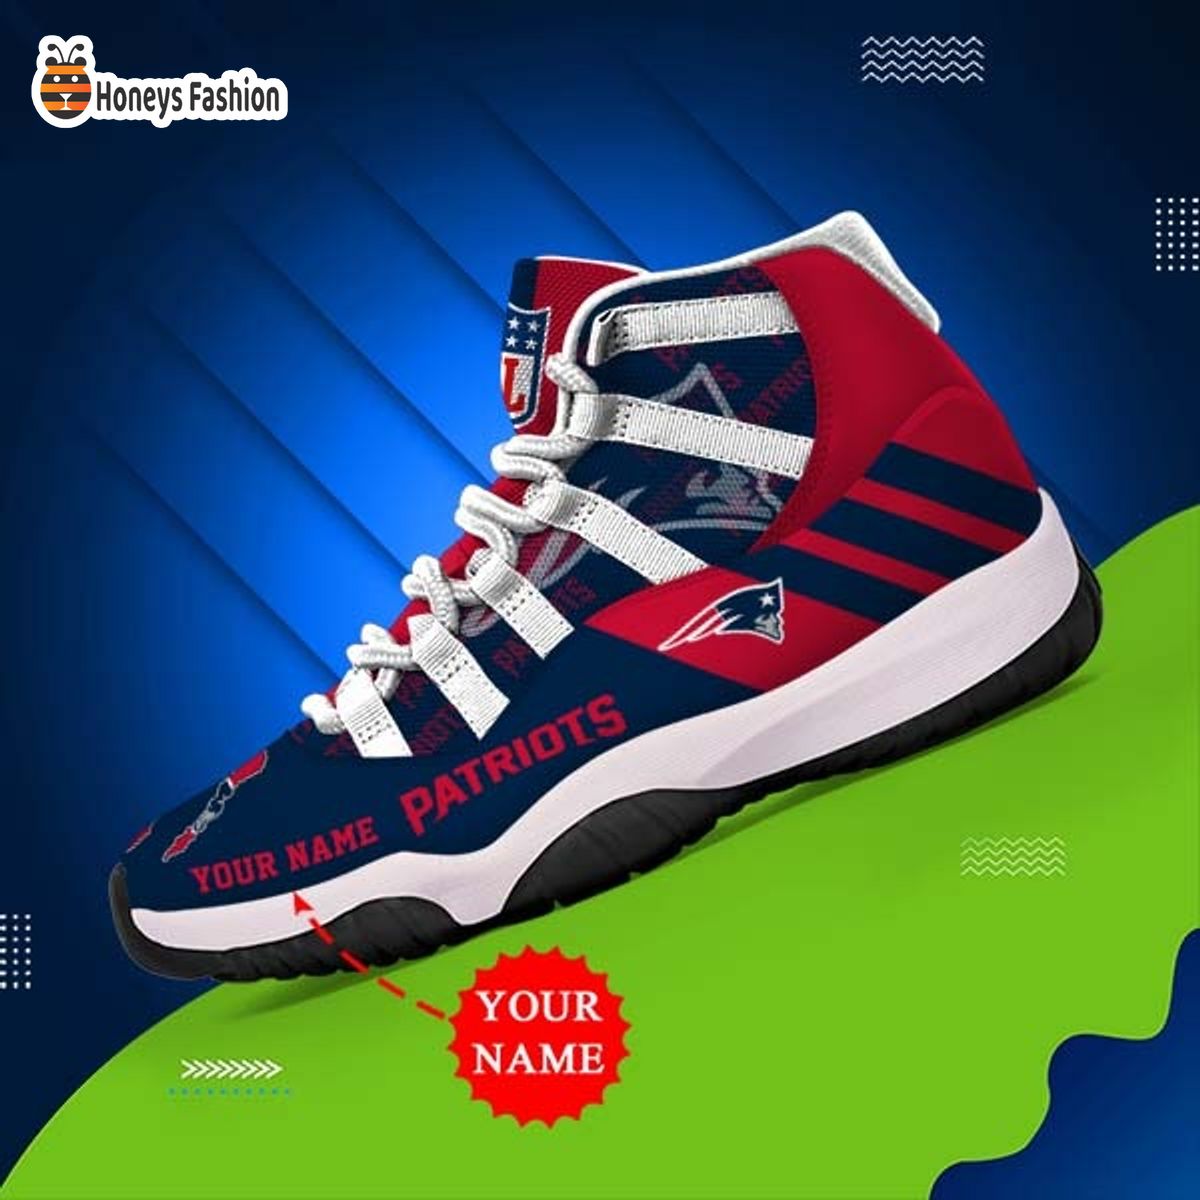 New England Patriots NFL Adidas Personalized Air Jordan 11 Shoes